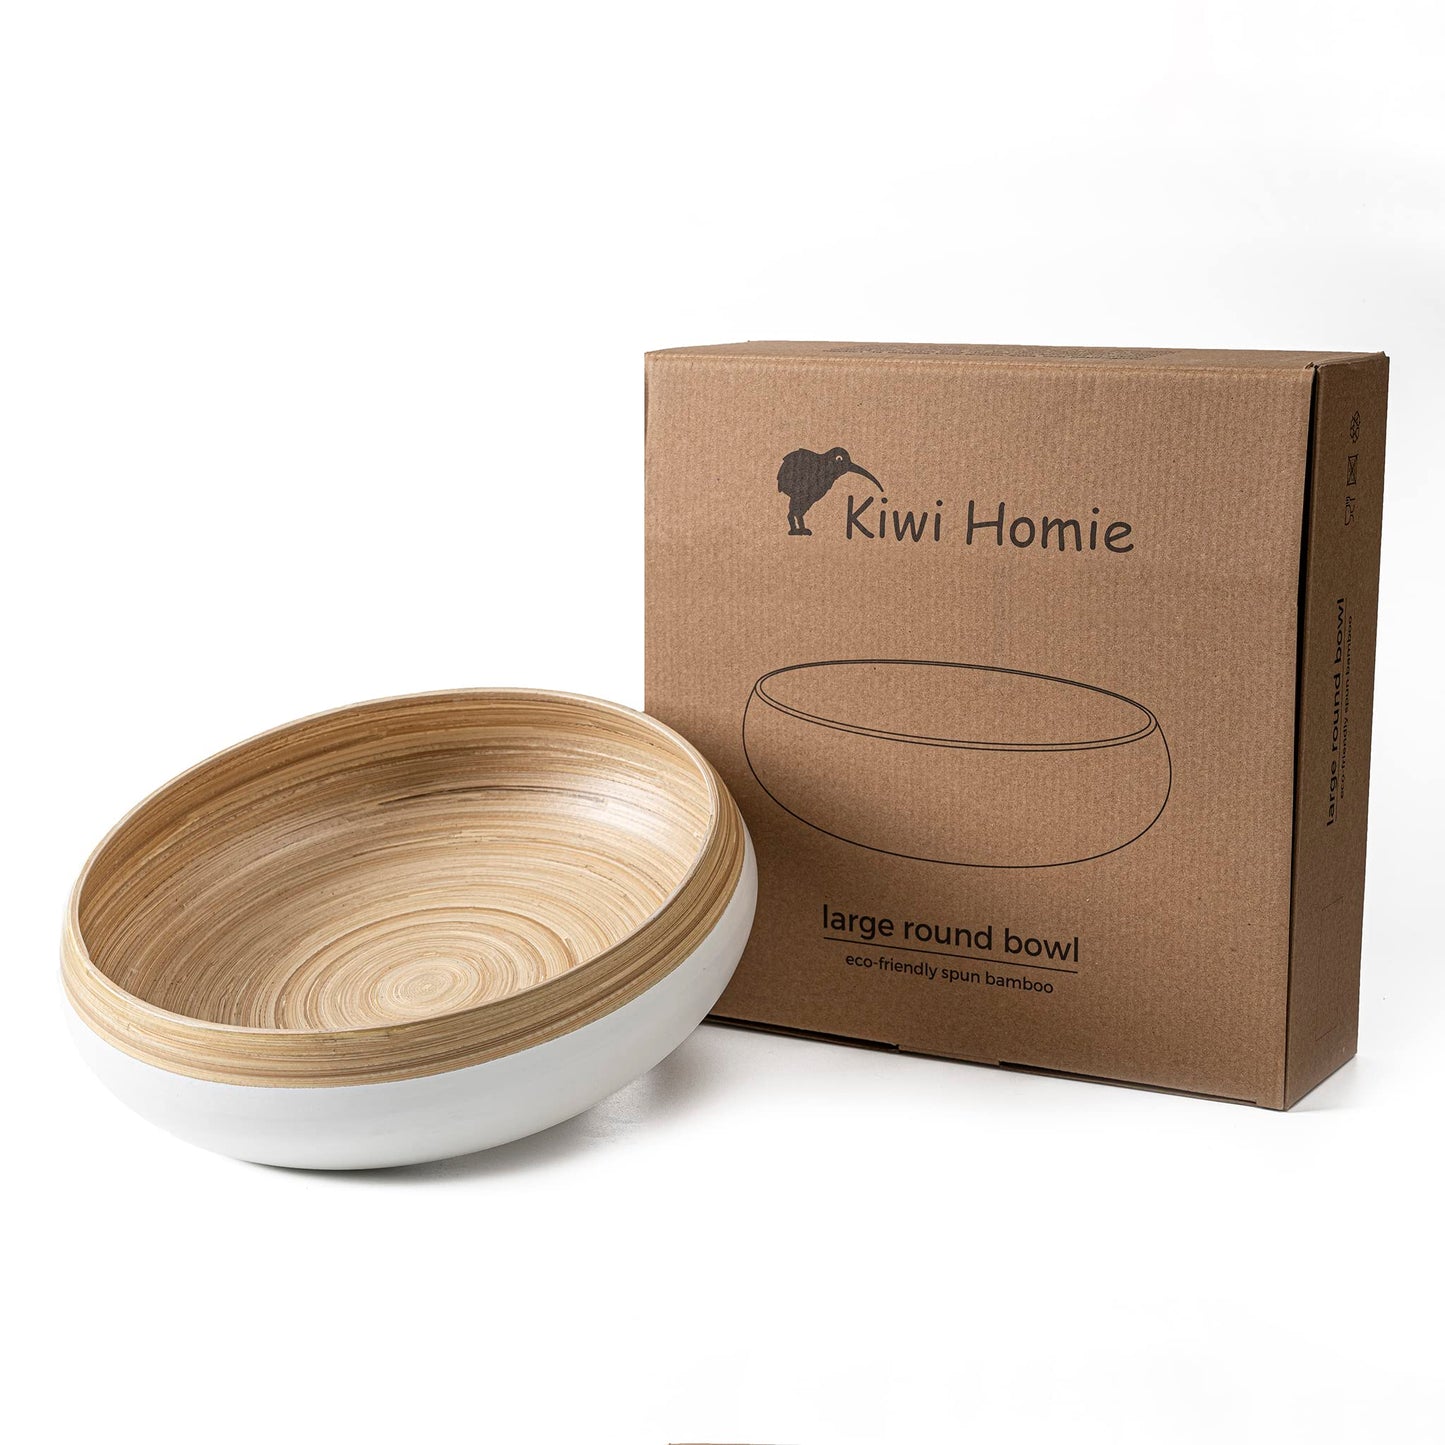 Kiwi Homie 11.81" Spun Bamboo Fruit Bowl, Bamboo Salad Bowl, Modern Large Serving Bowl, Decorative Bowl for Kitchen, Party, BBQs, Natural Handicrafted Bamboo Bowl (White)